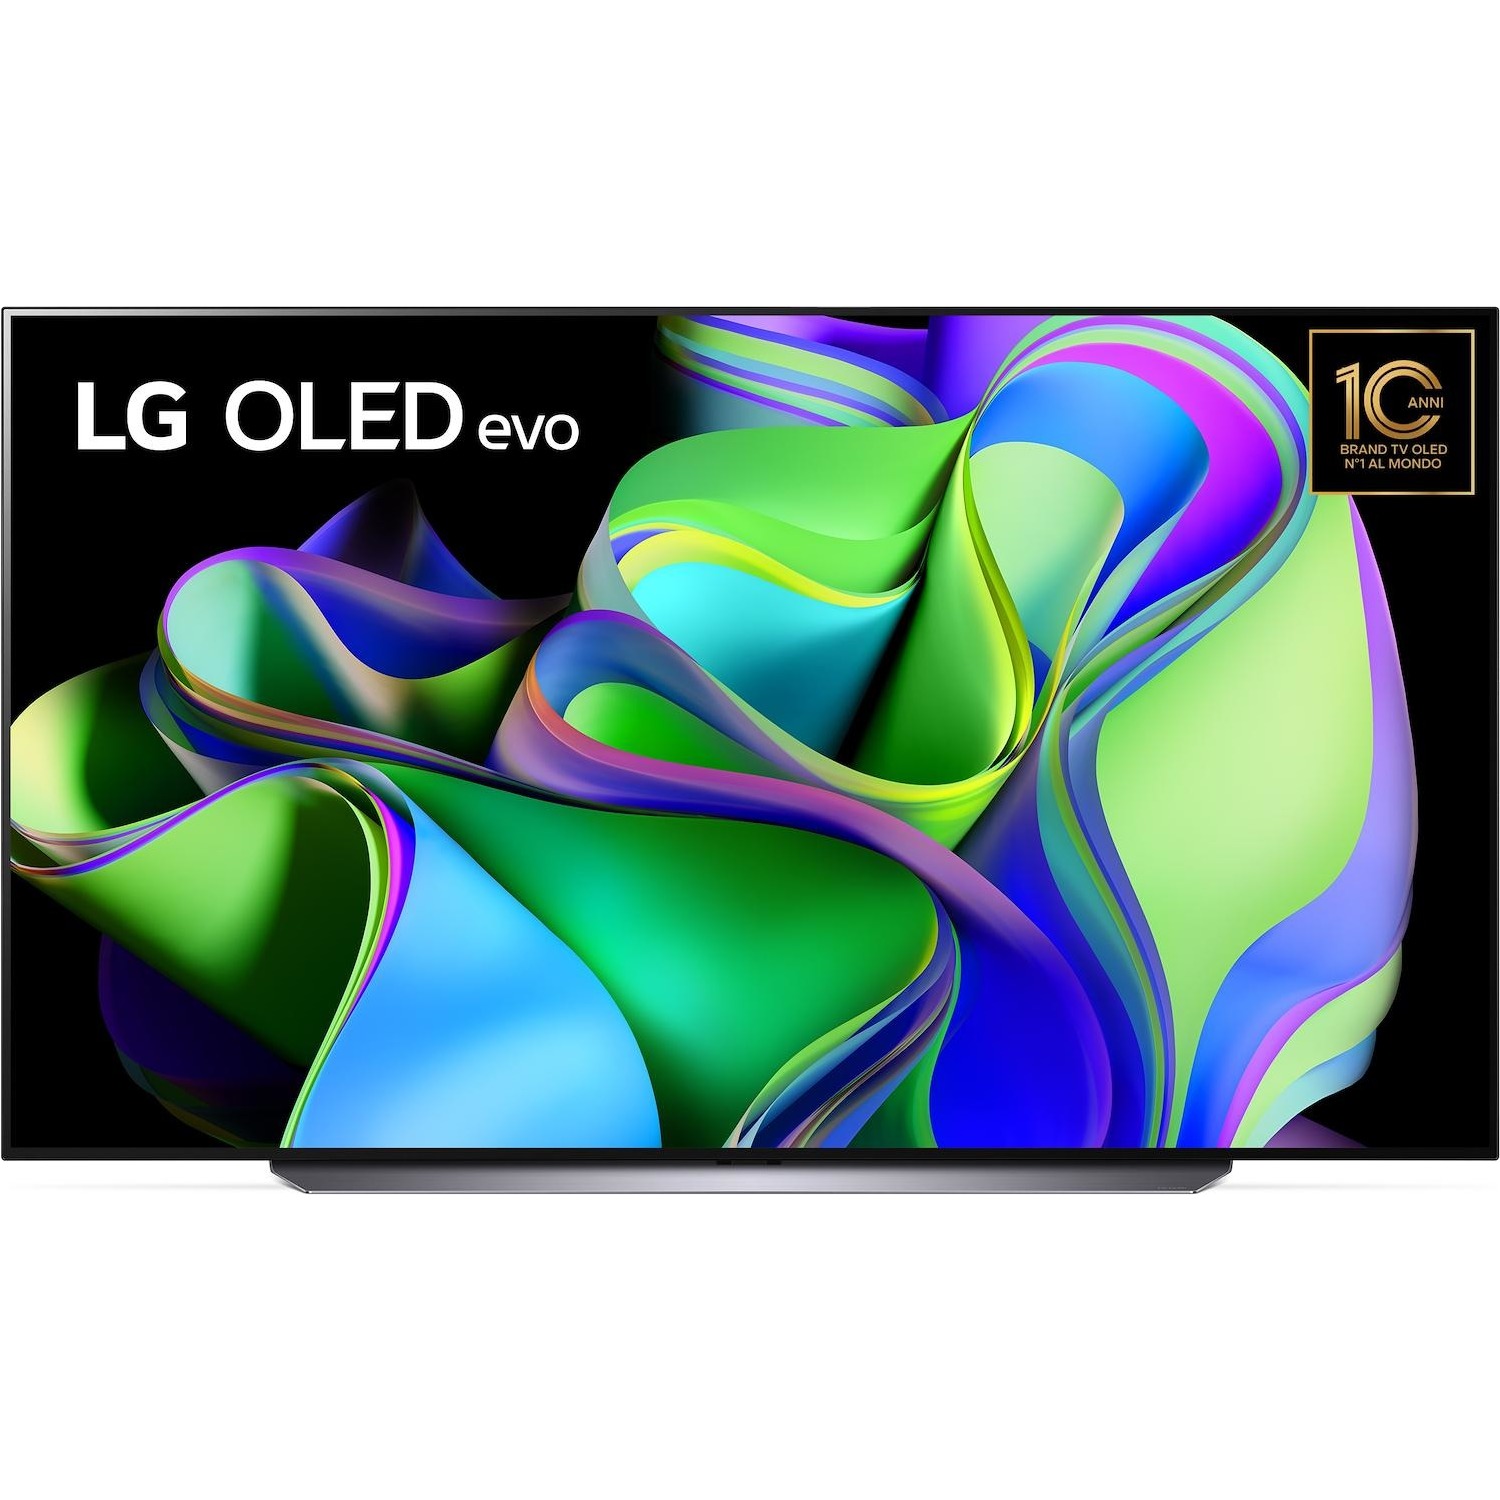 Immagine per TV OLED UHD 4K Smart LG OLED83C34 da DIMOStore